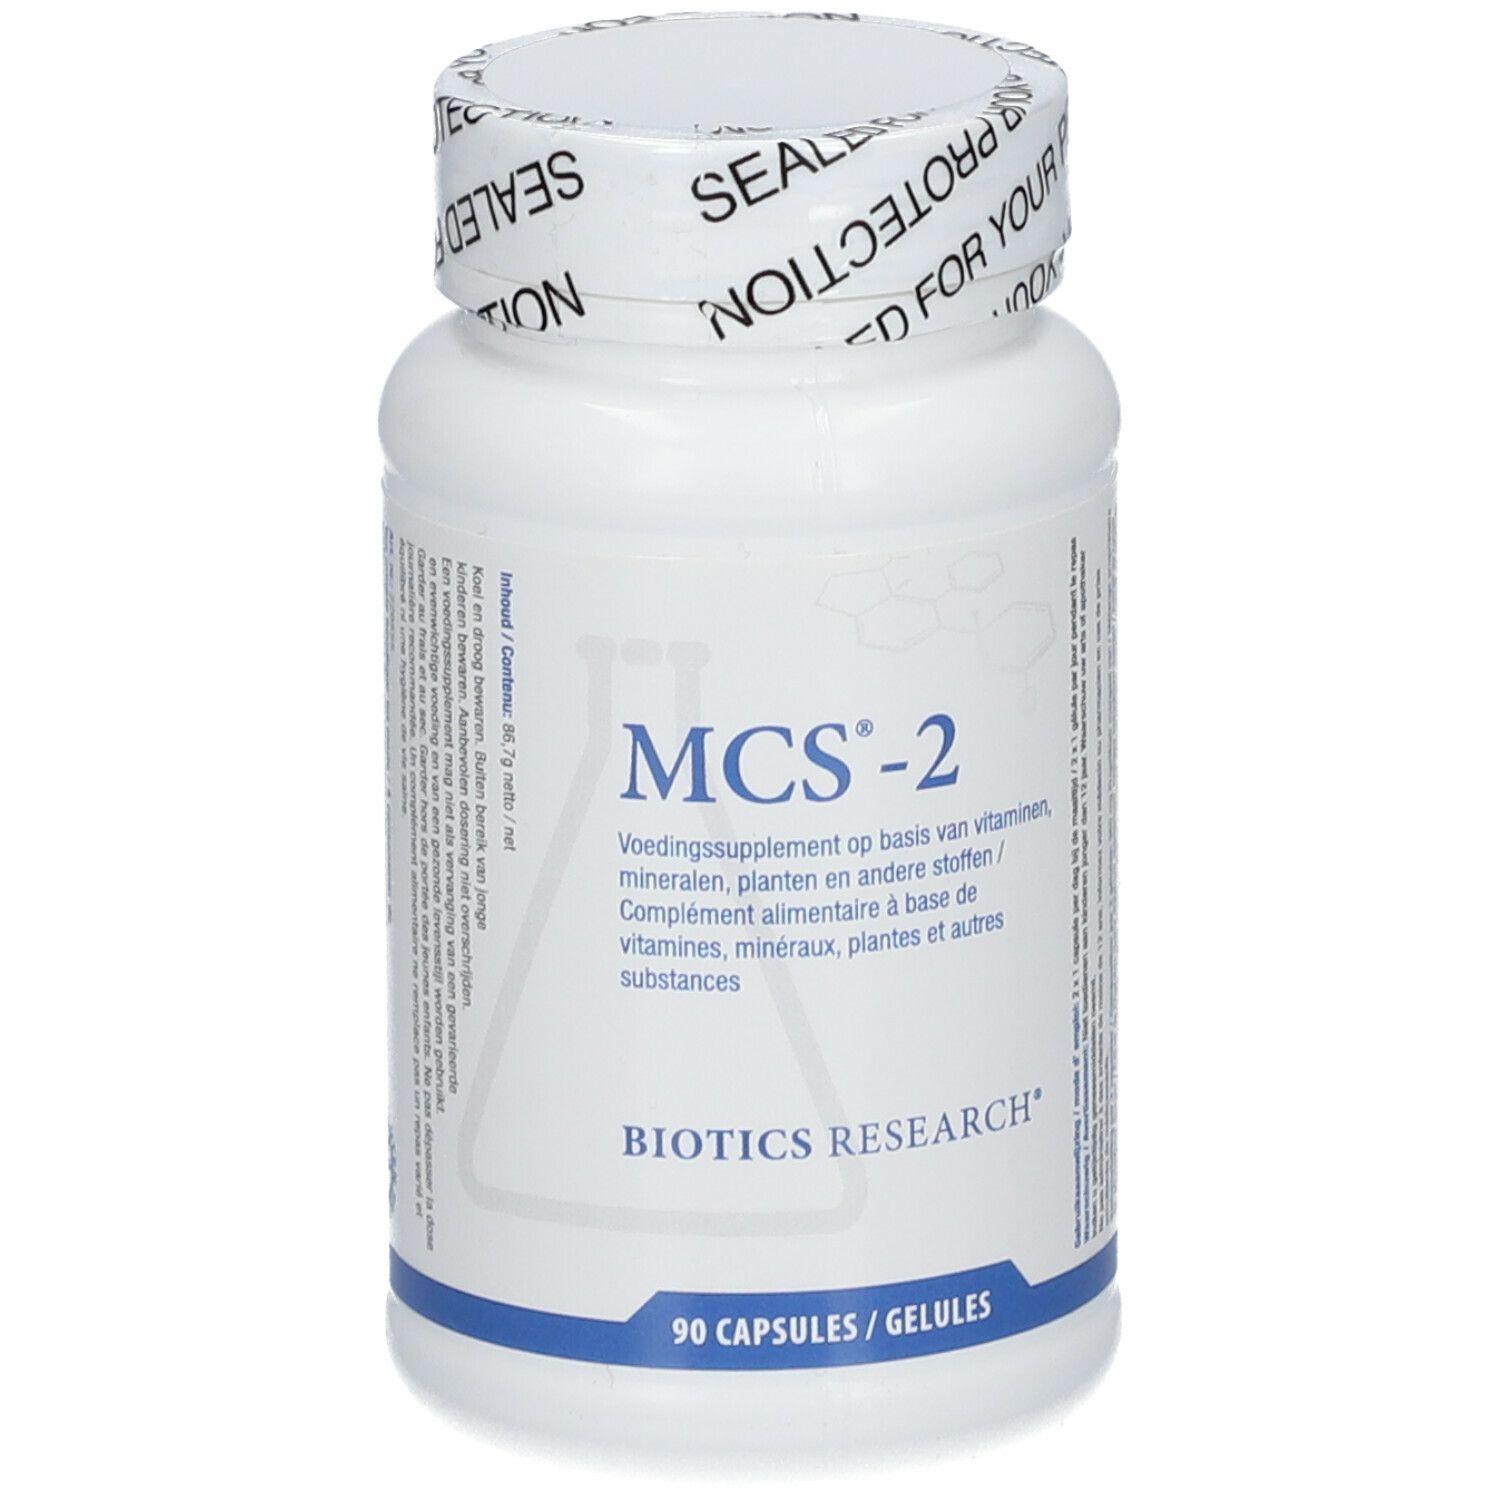 BIOTICS RESEARCH® MCS®-2